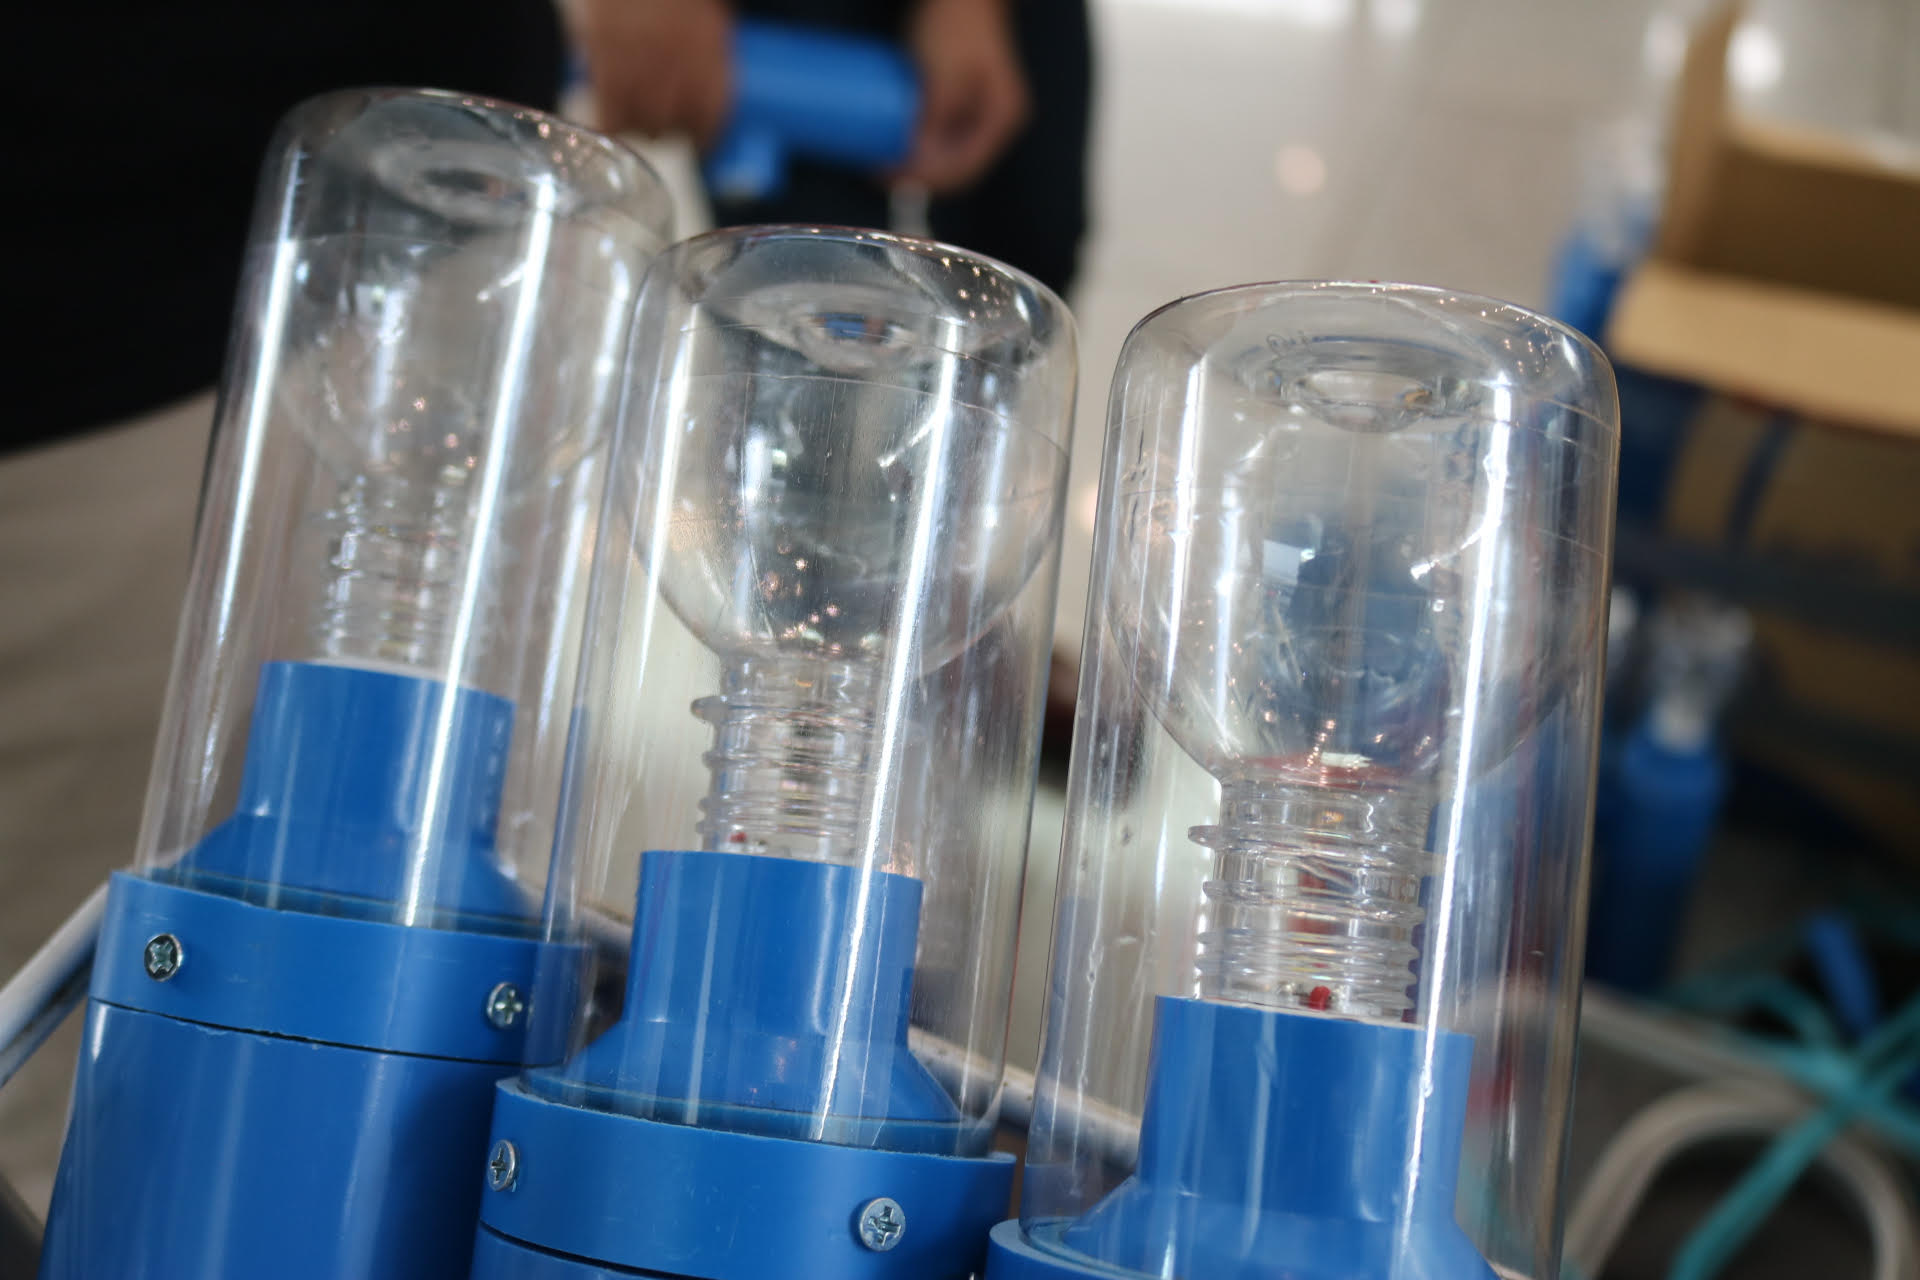 AirAsia Liter of Light brought lamps to Zamboanga